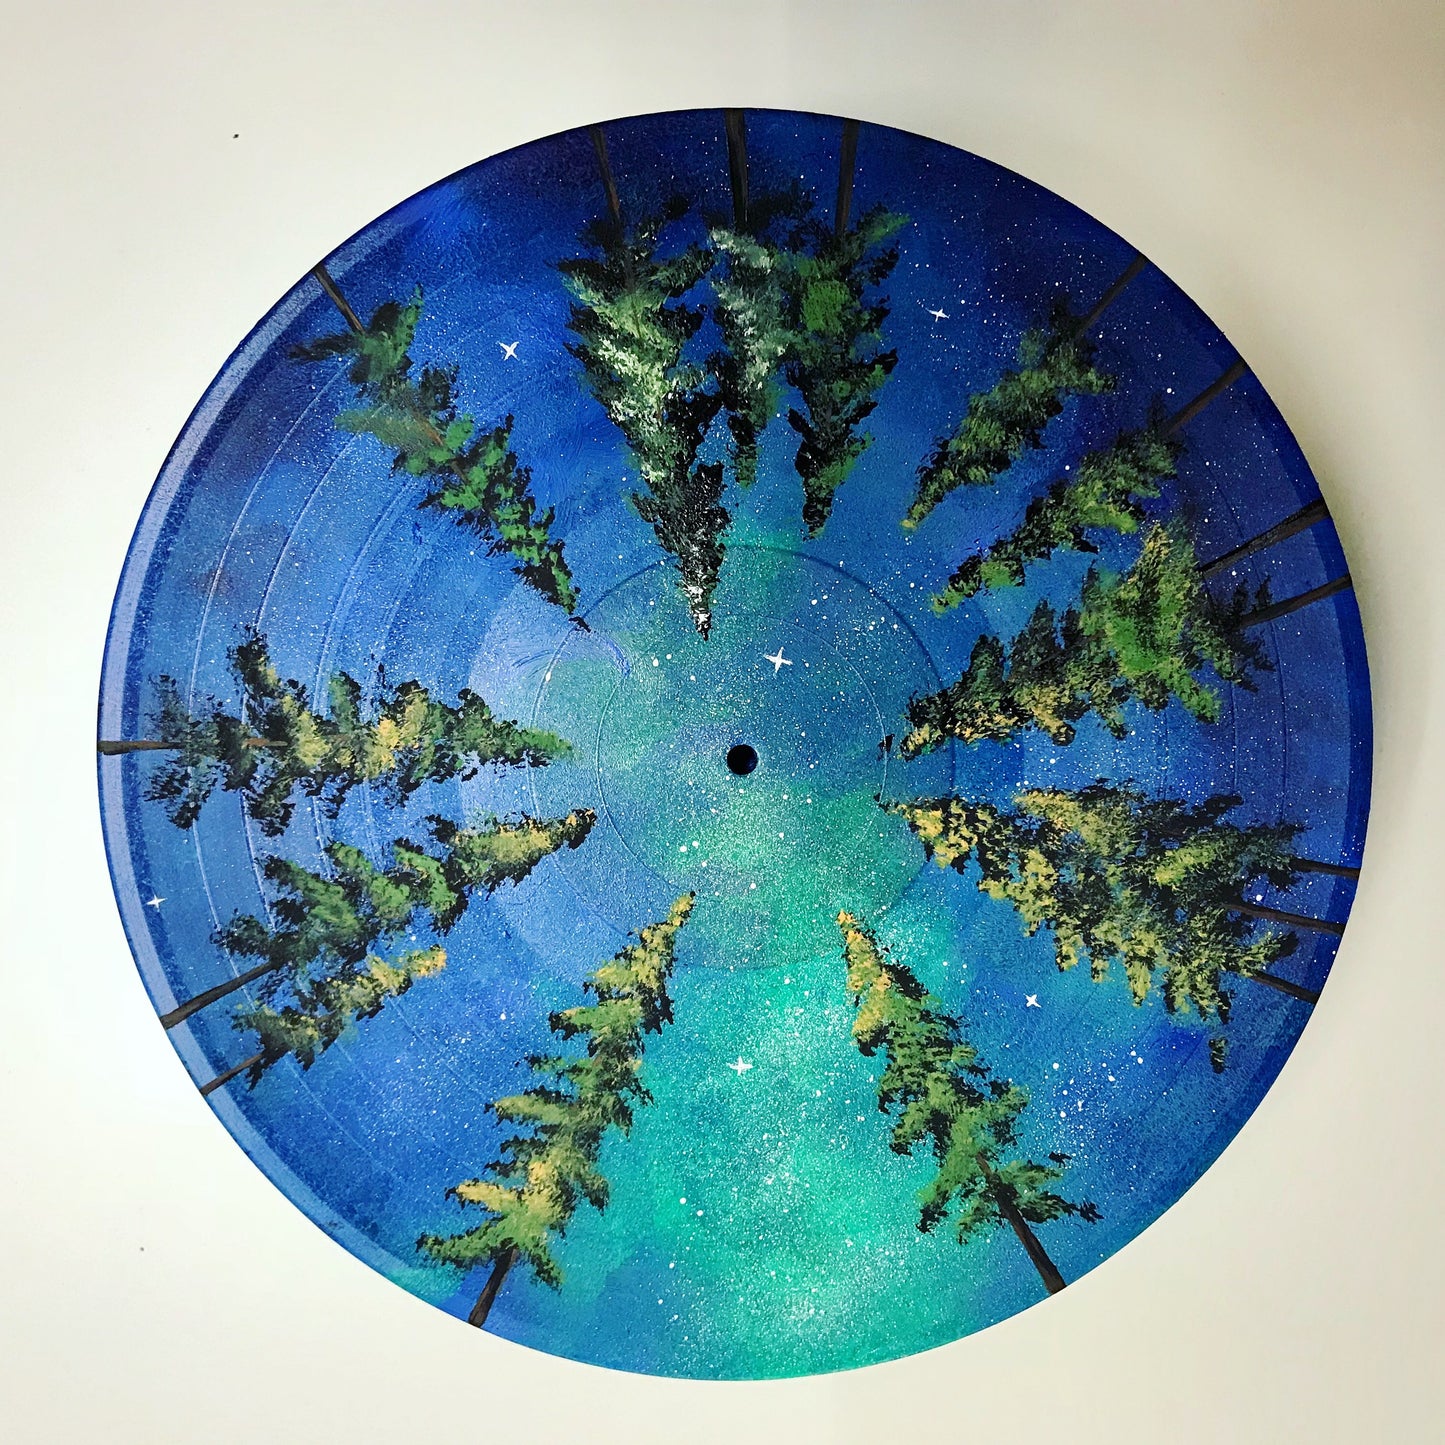 Galaxy tree vinyl record  painting